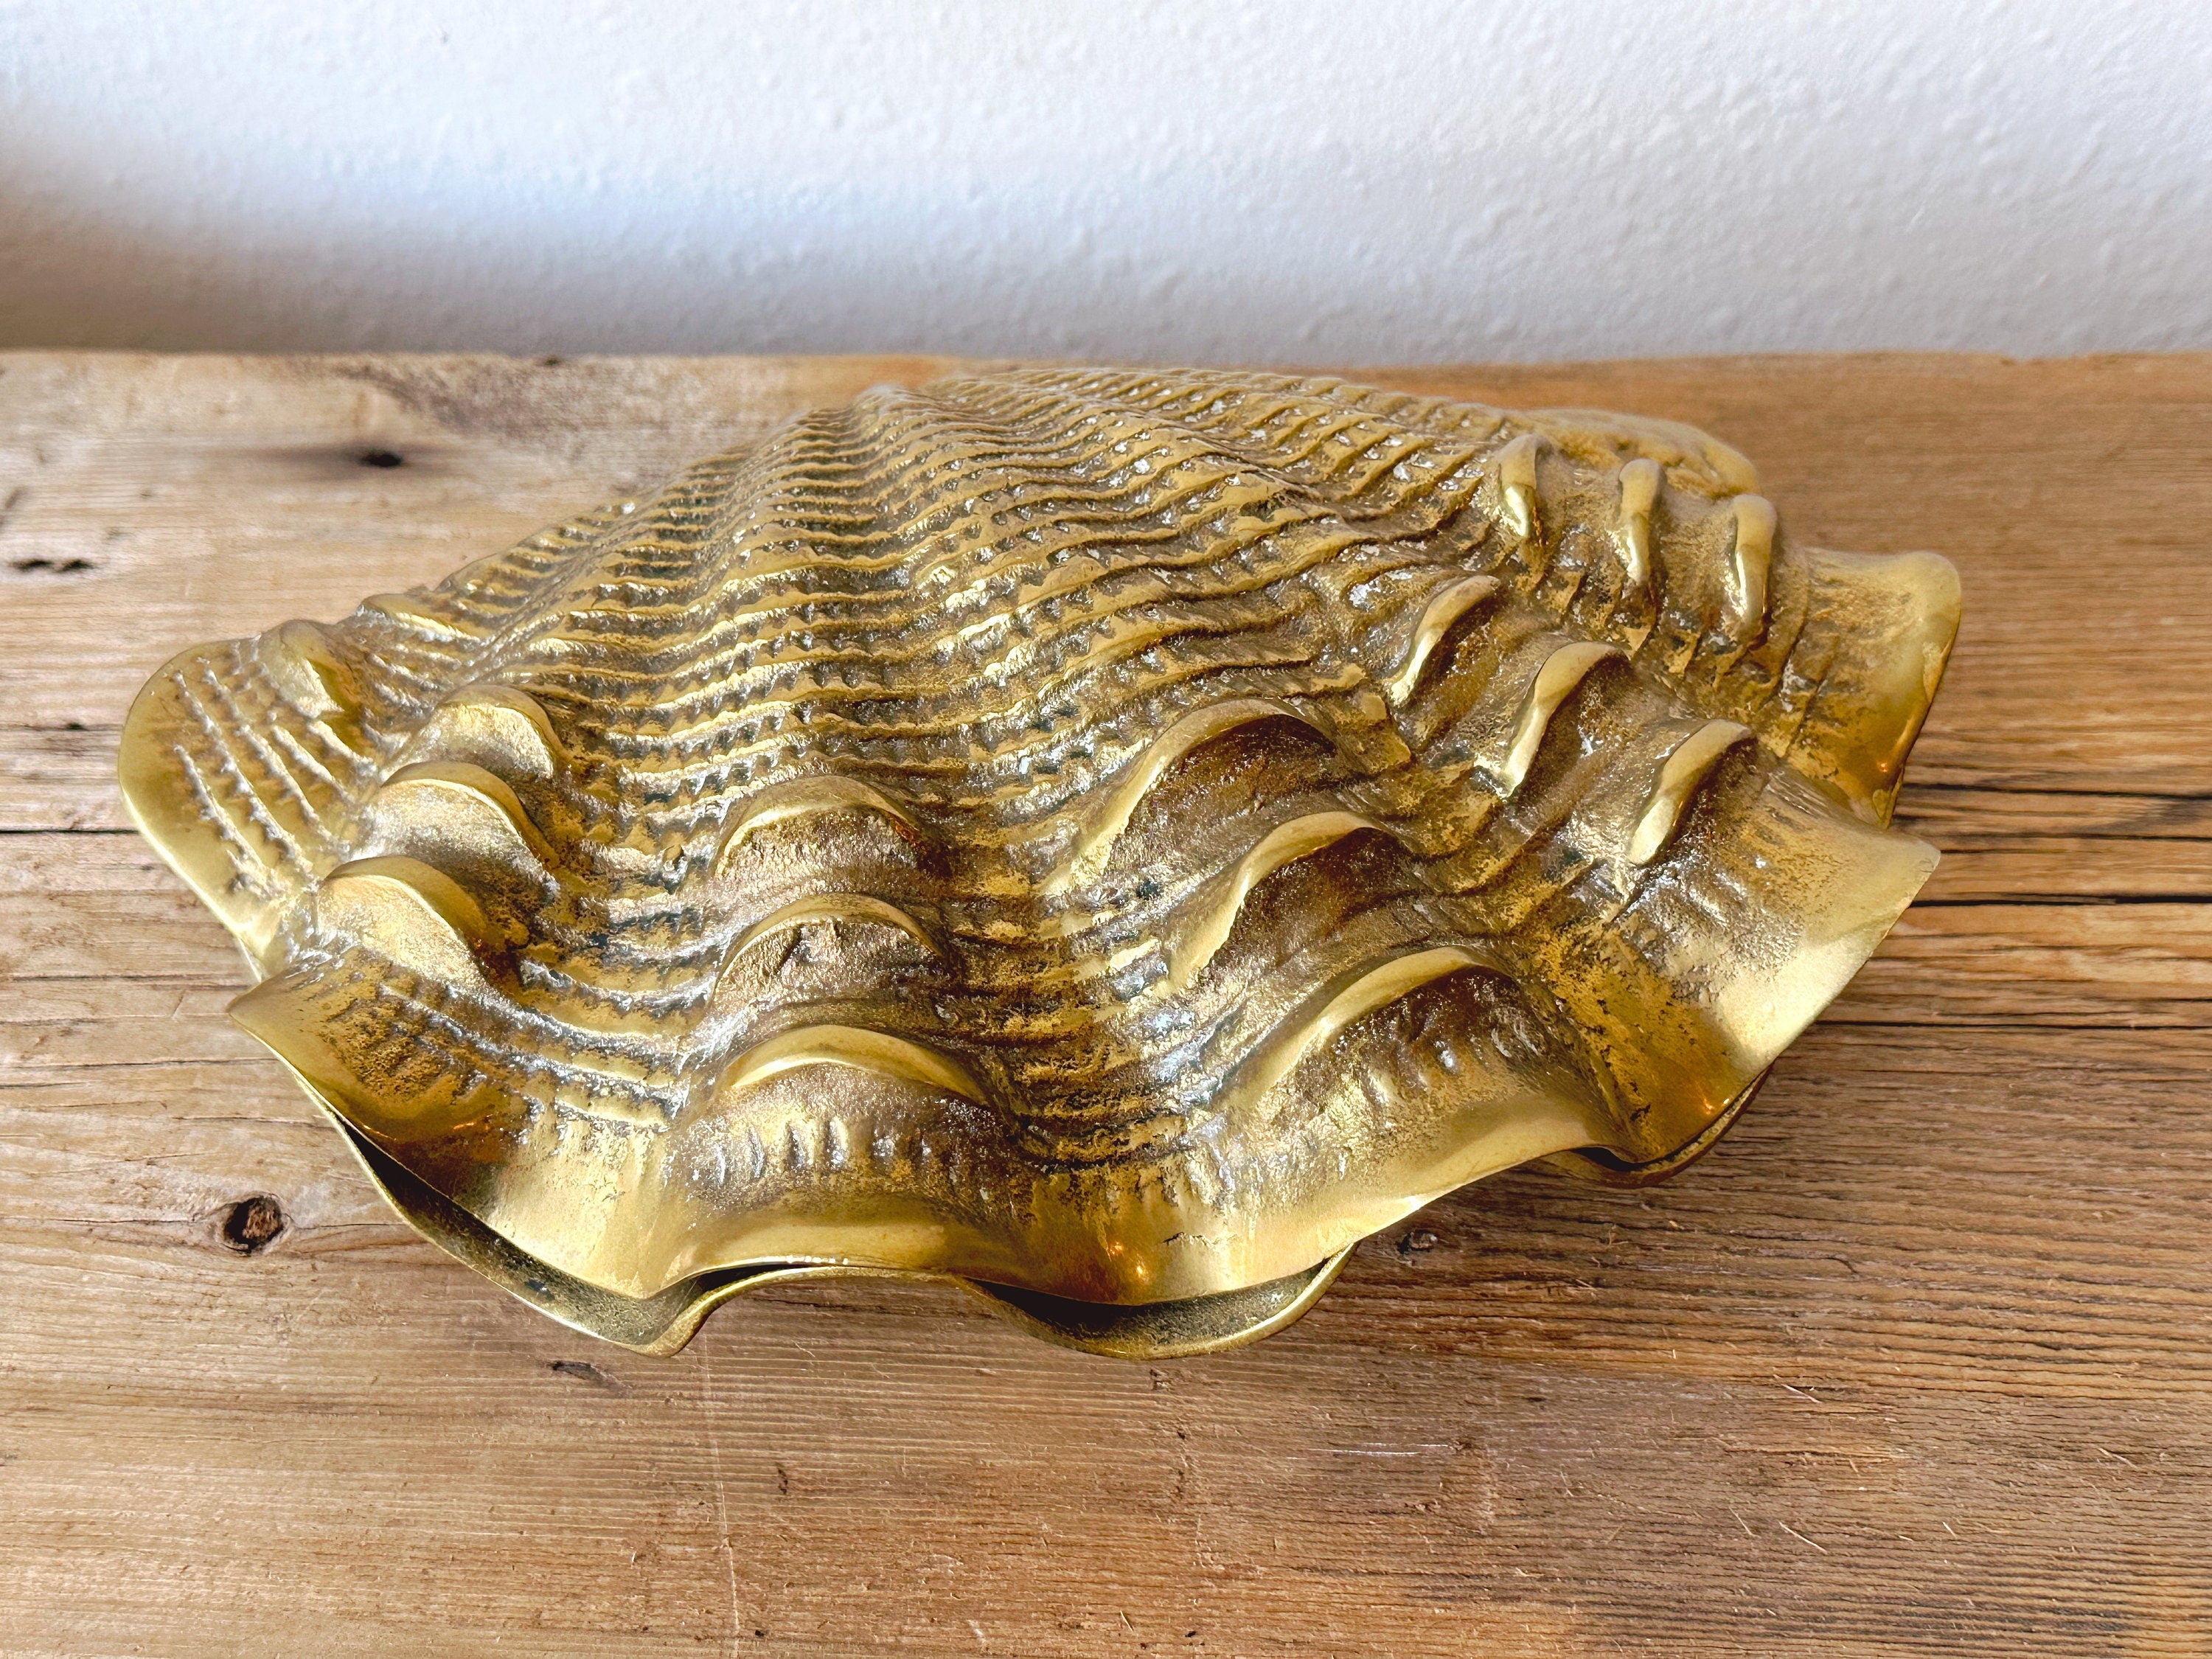 Vintage brass clamshell - Gem